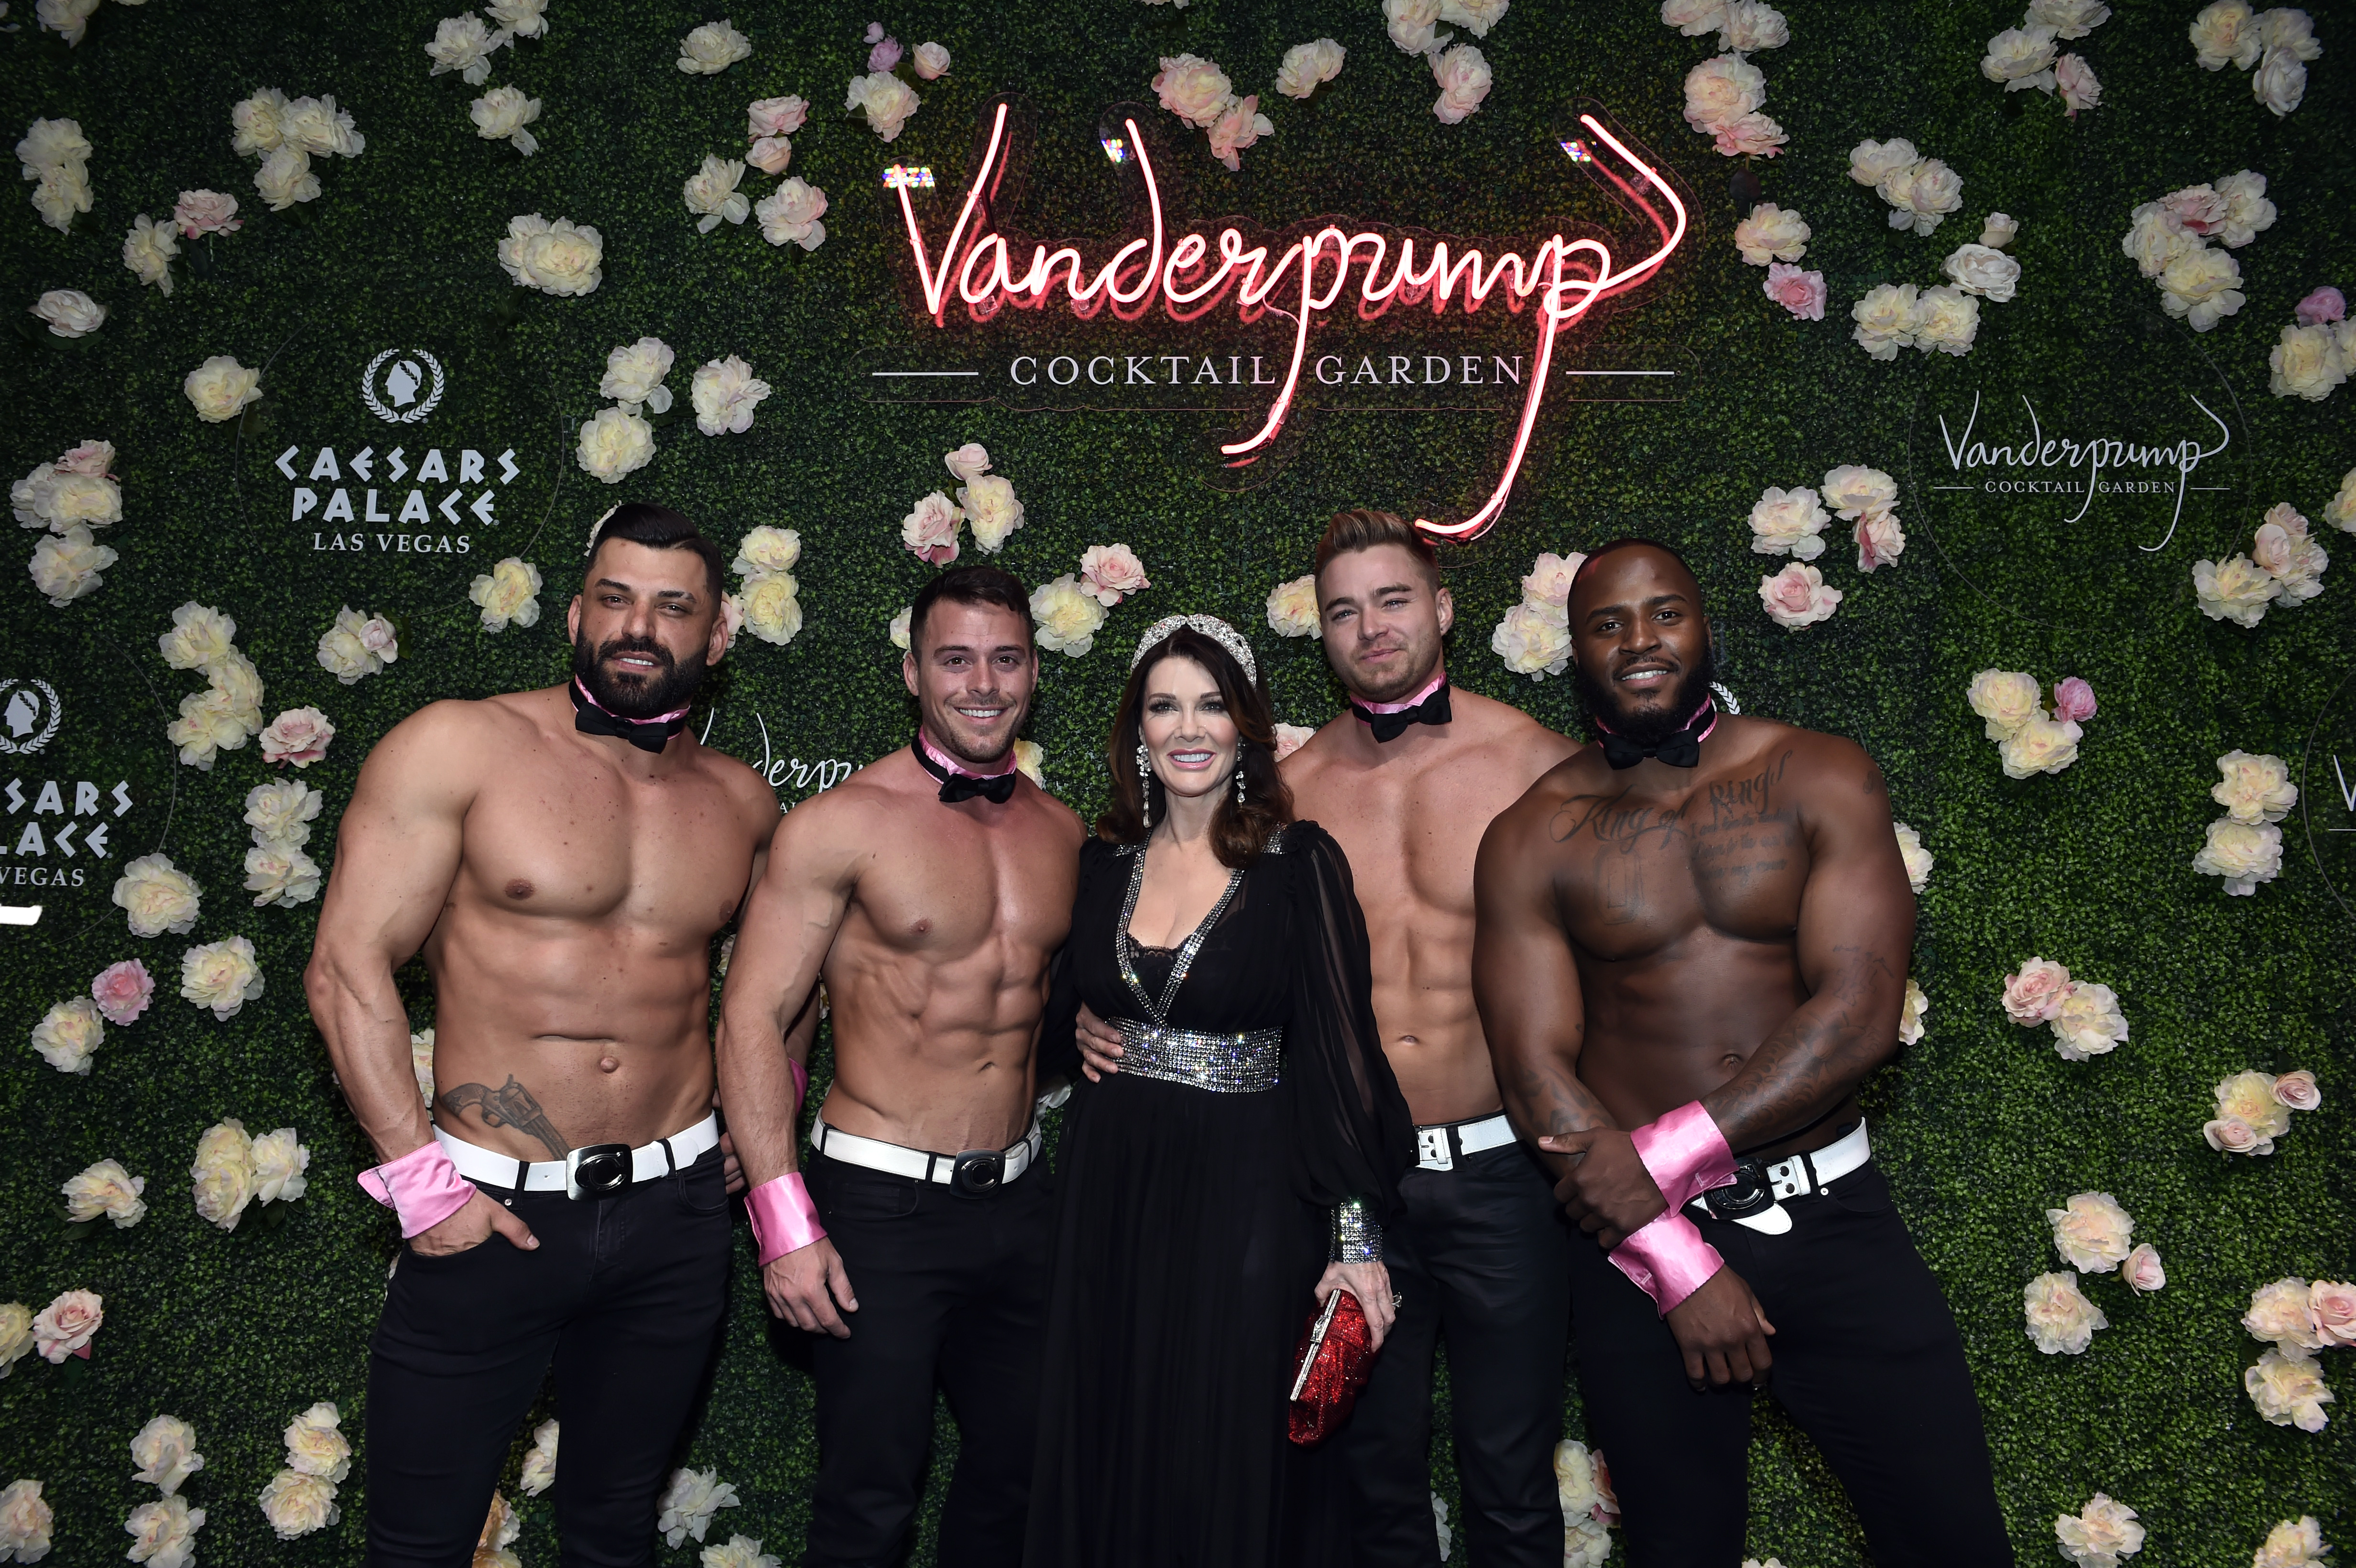 Lisa Vanderpump And Rules Co-Stars Open Cocktail Garden